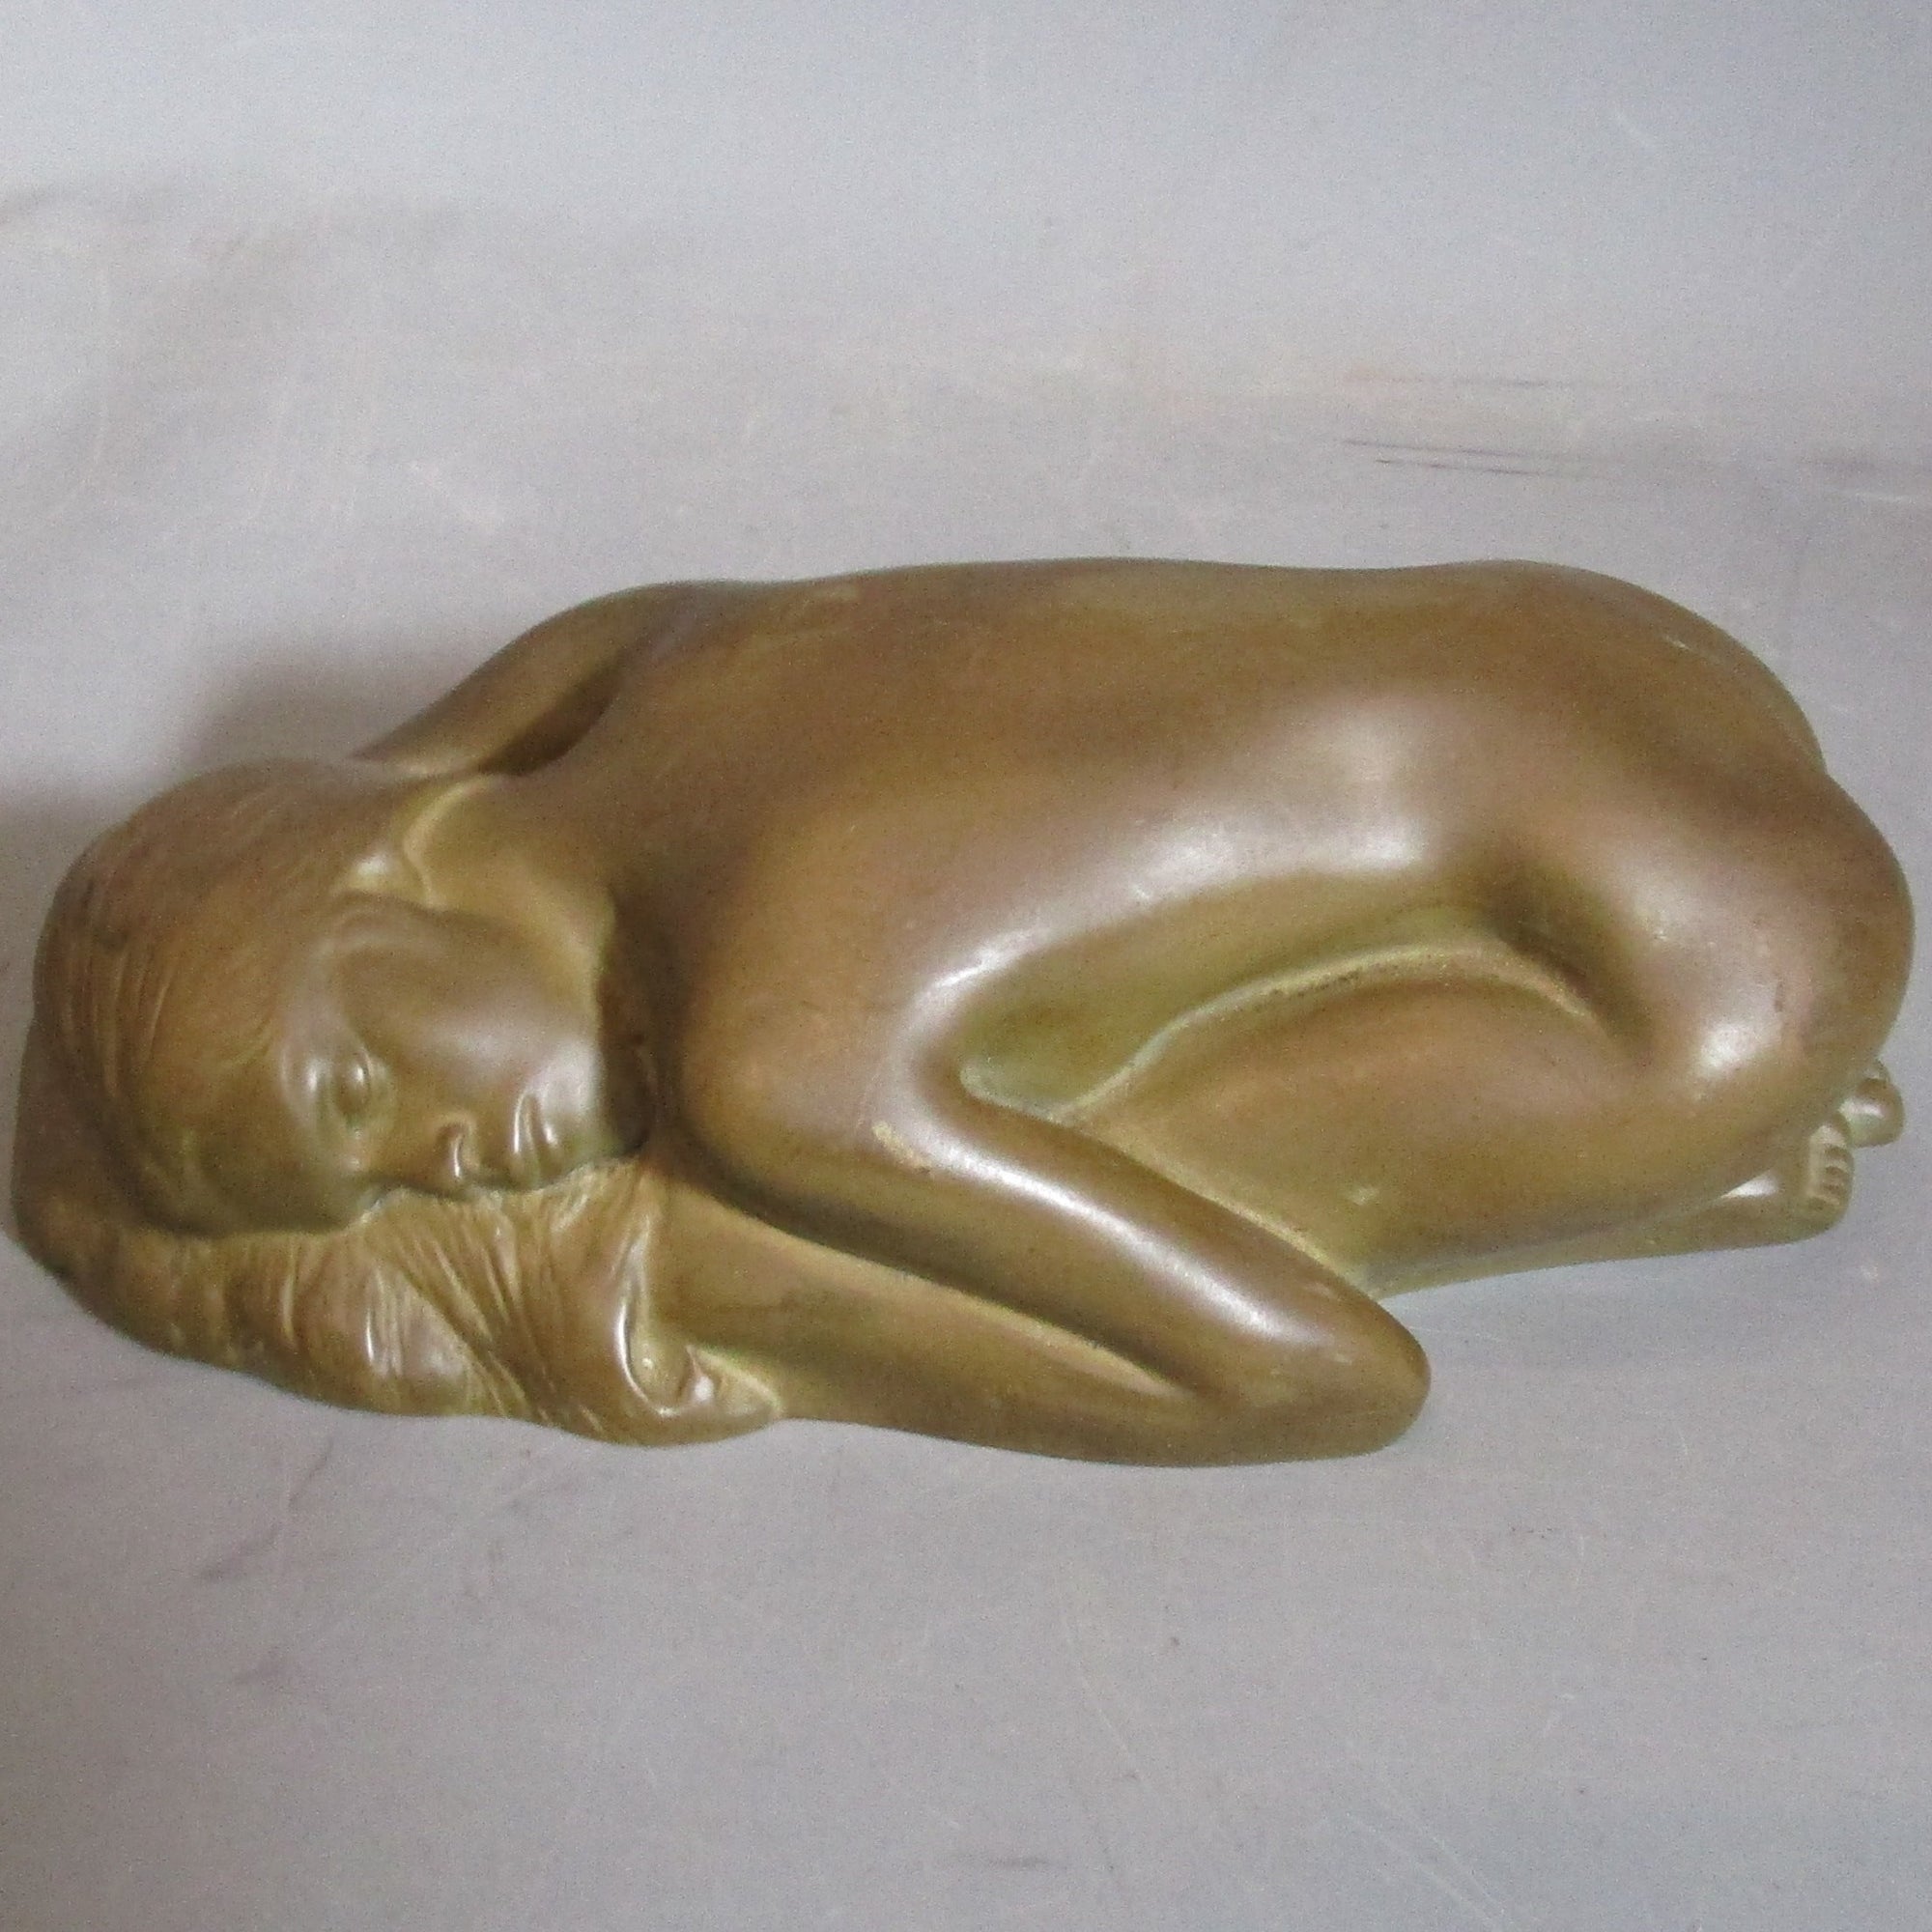 Carved Slate Sleeping Nude Lady Figurine With Bronzed Effect Vintage Art Deco c1930